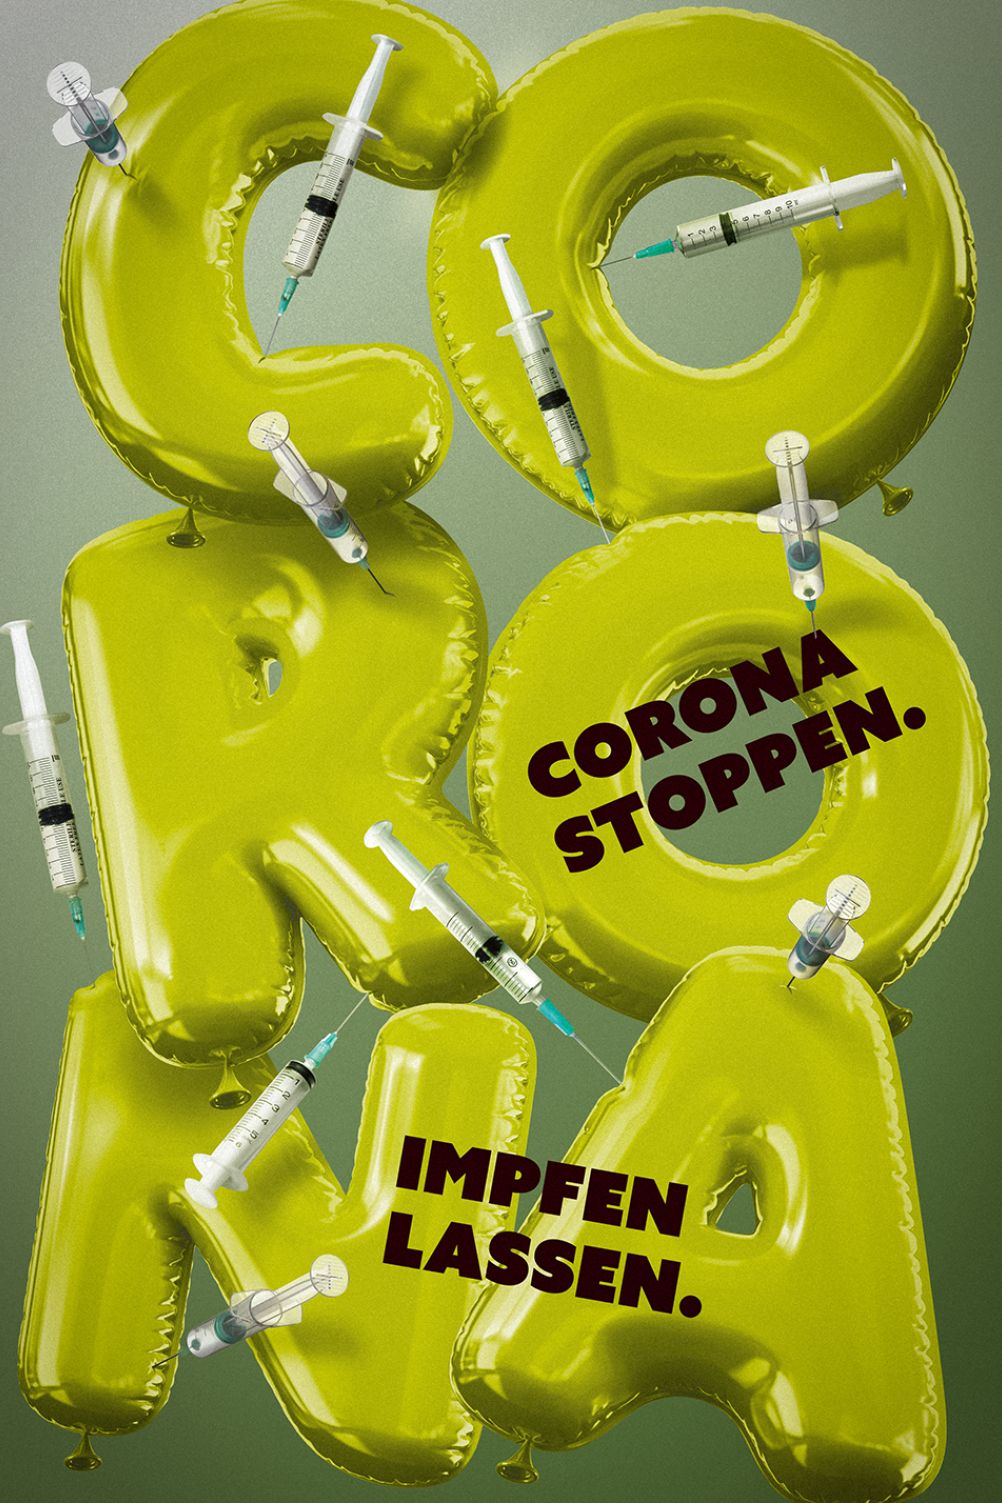 Plakat "Corona stoppen"